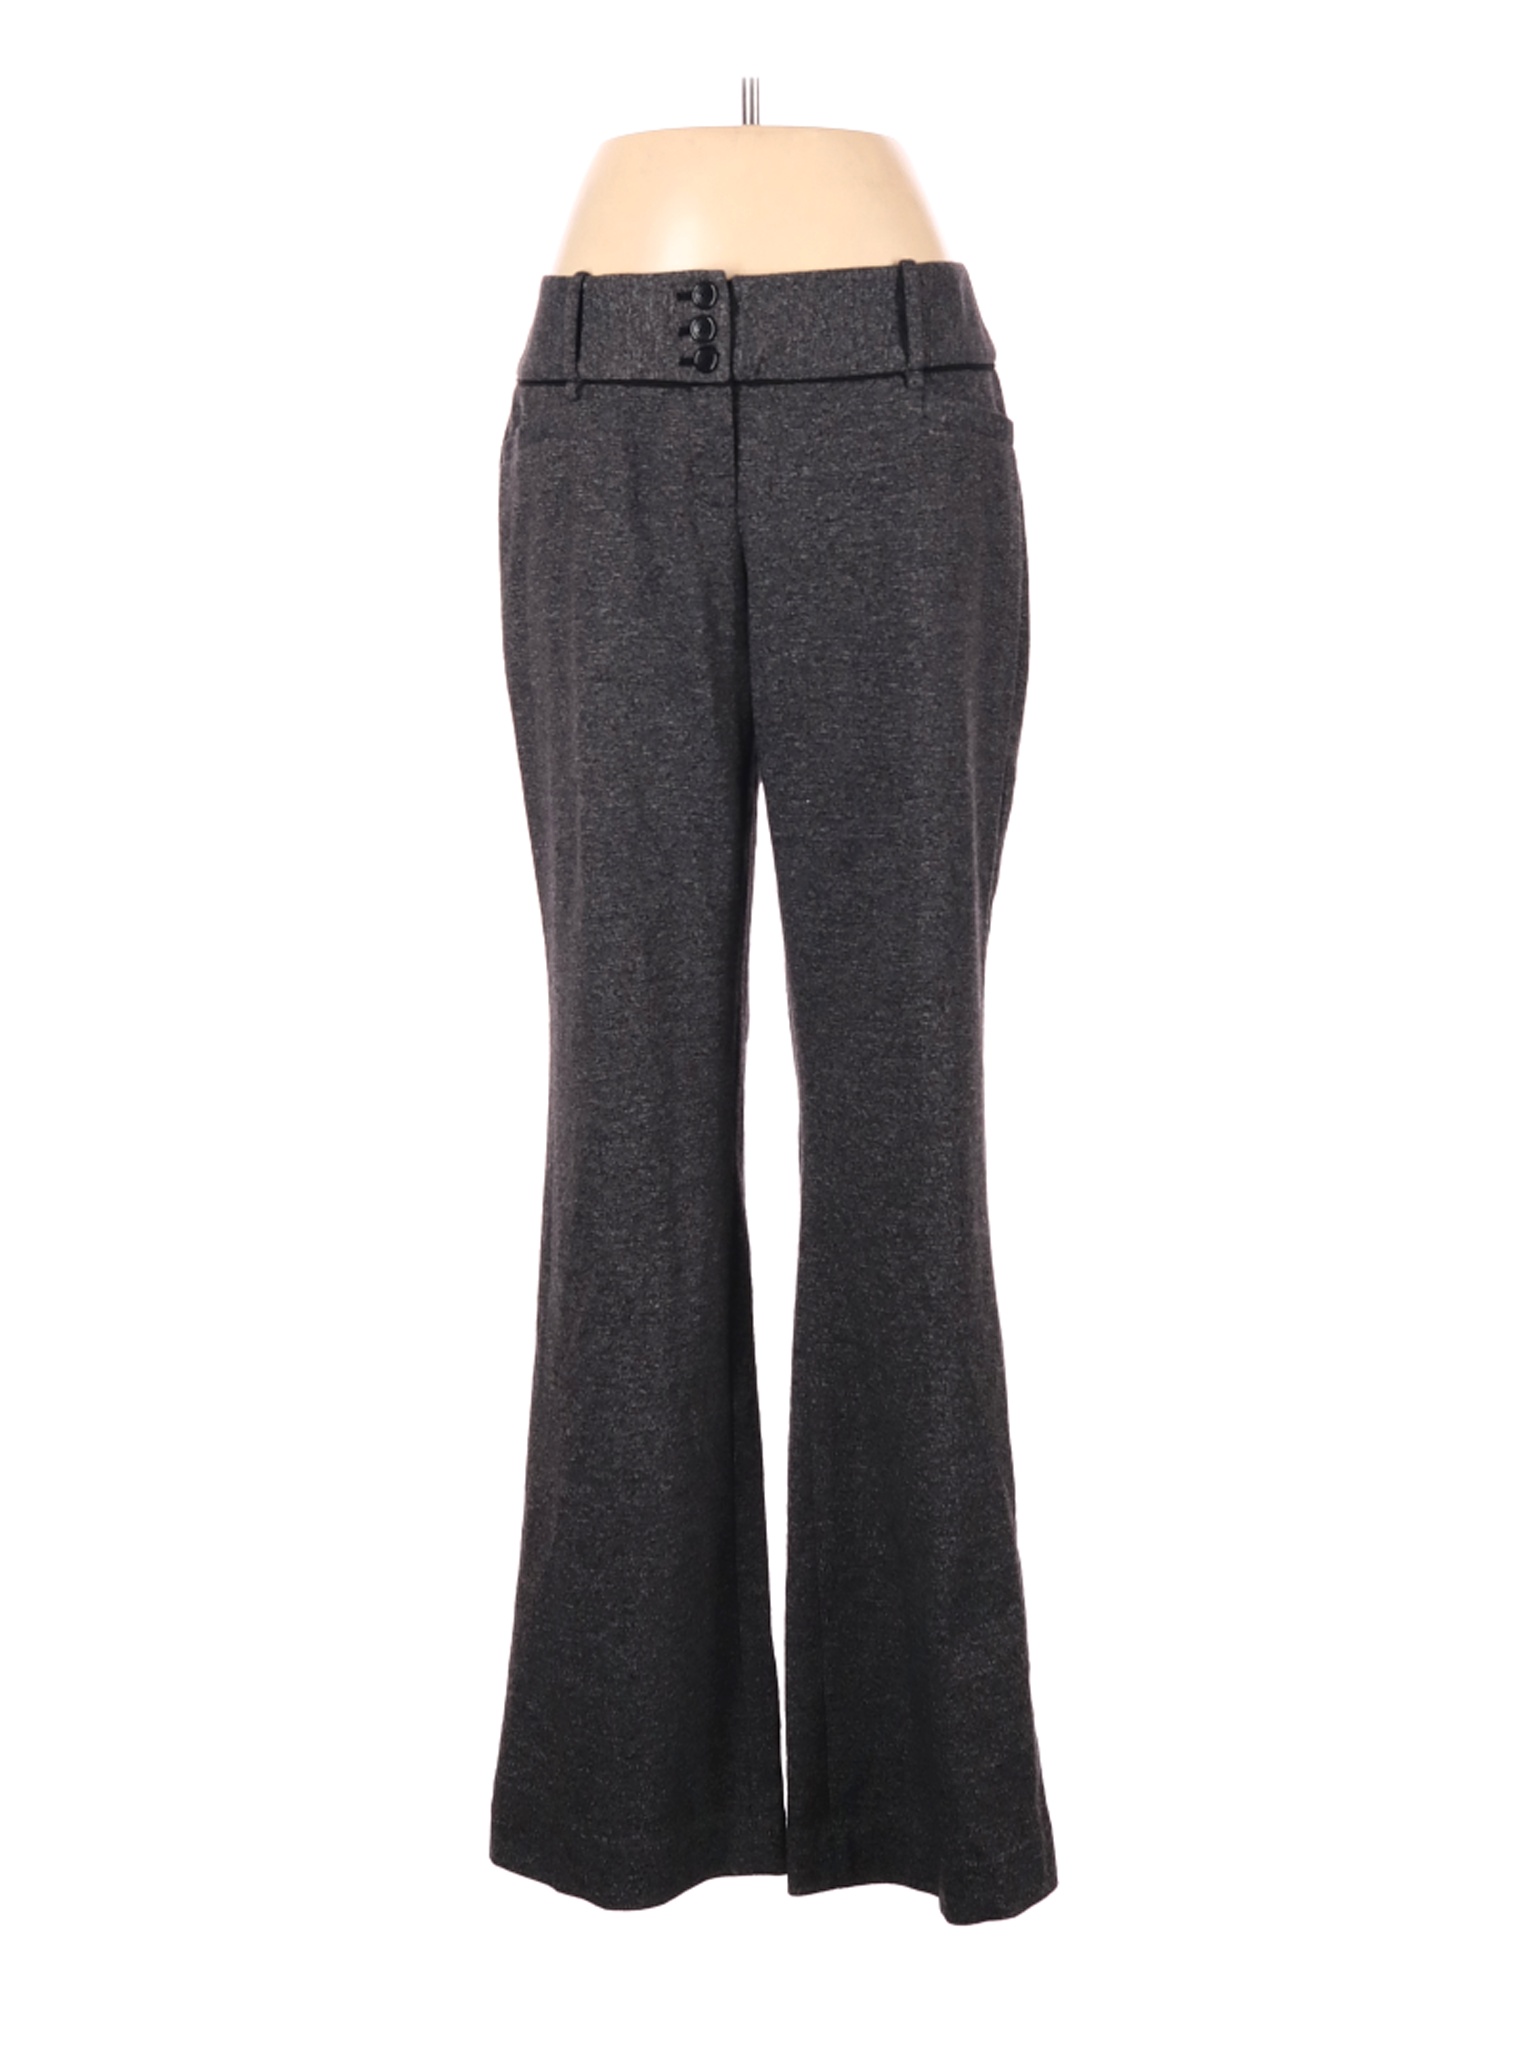 The Limited Women Gray Dress Pants 6 | eBay